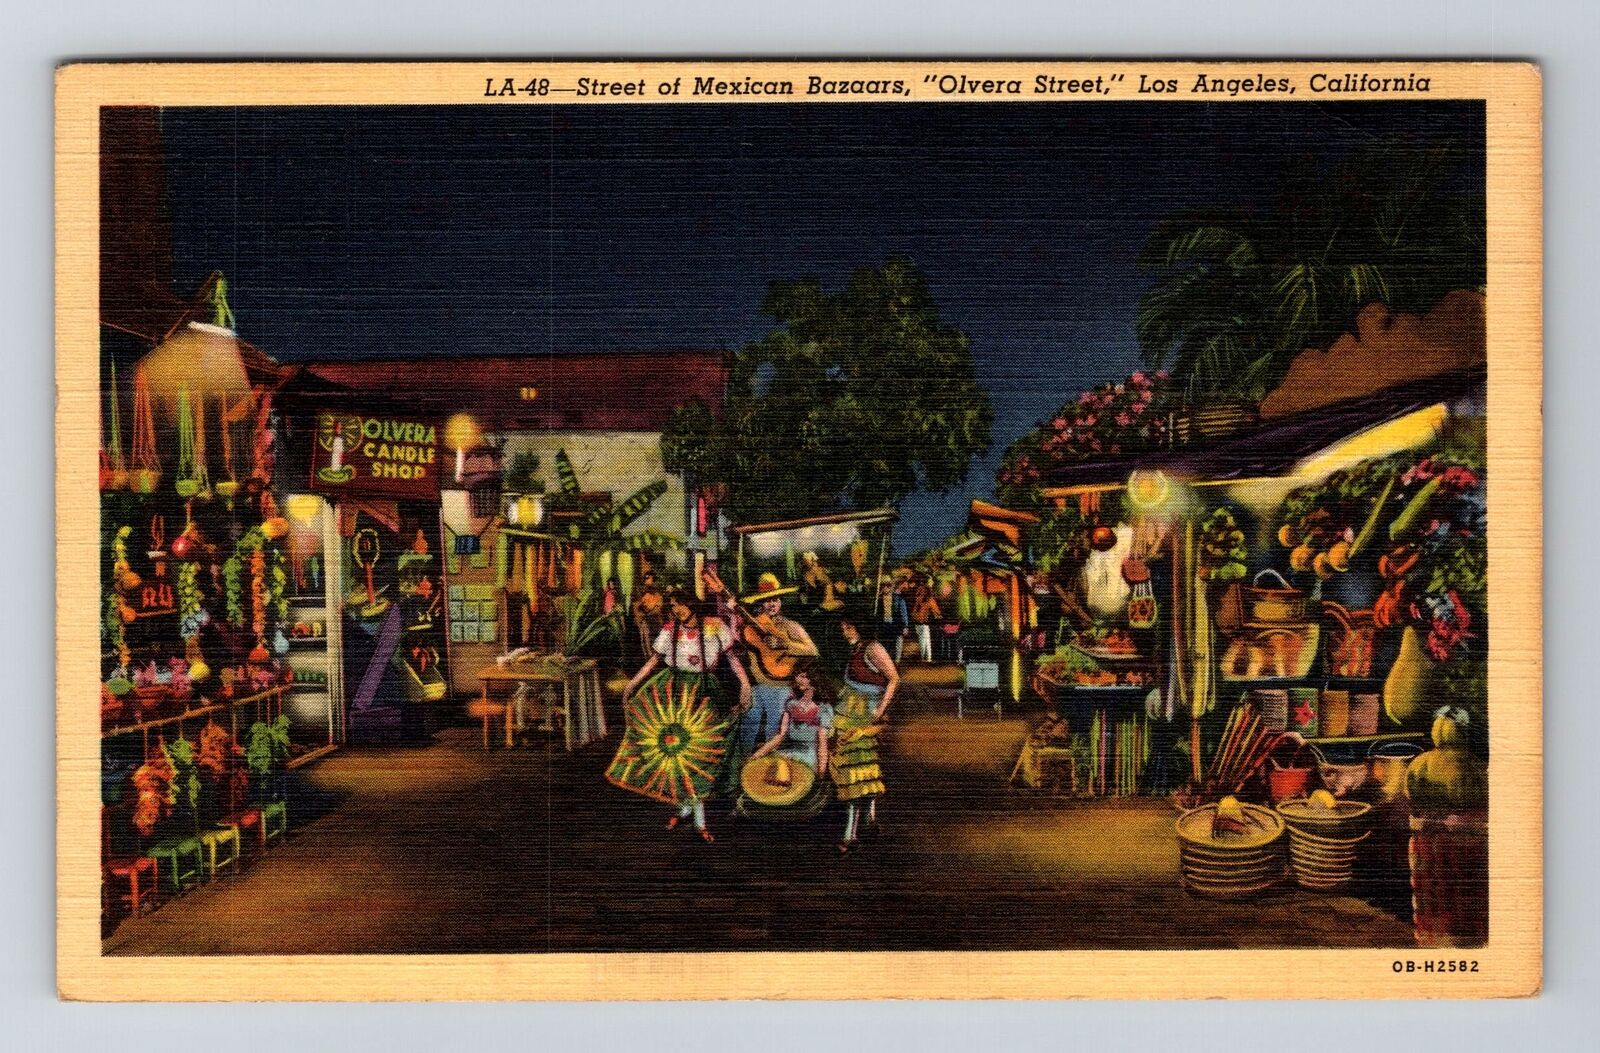 Los Angeles CA-California, Old Olvera Street, Bazaars, c1943 Vintage Postcard